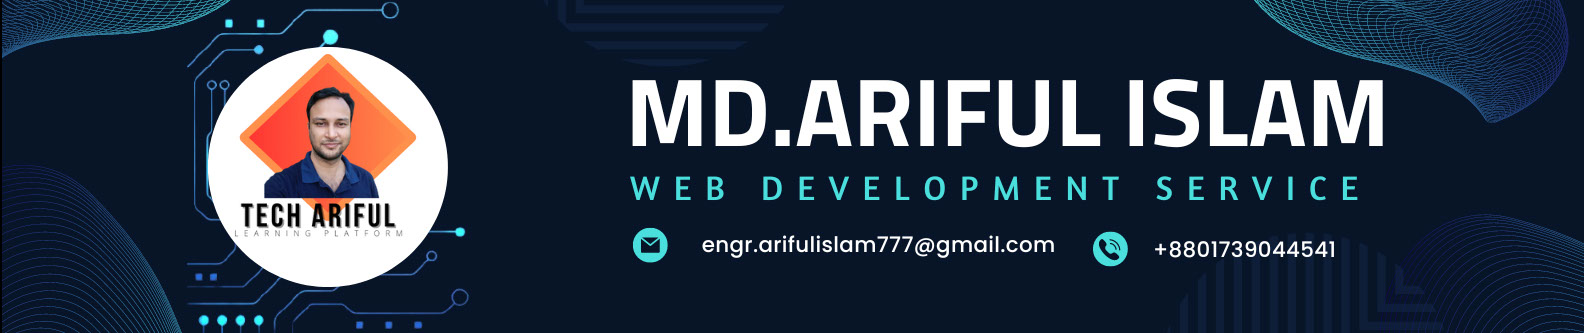 Banner de perfil de Md.Ariful Islam